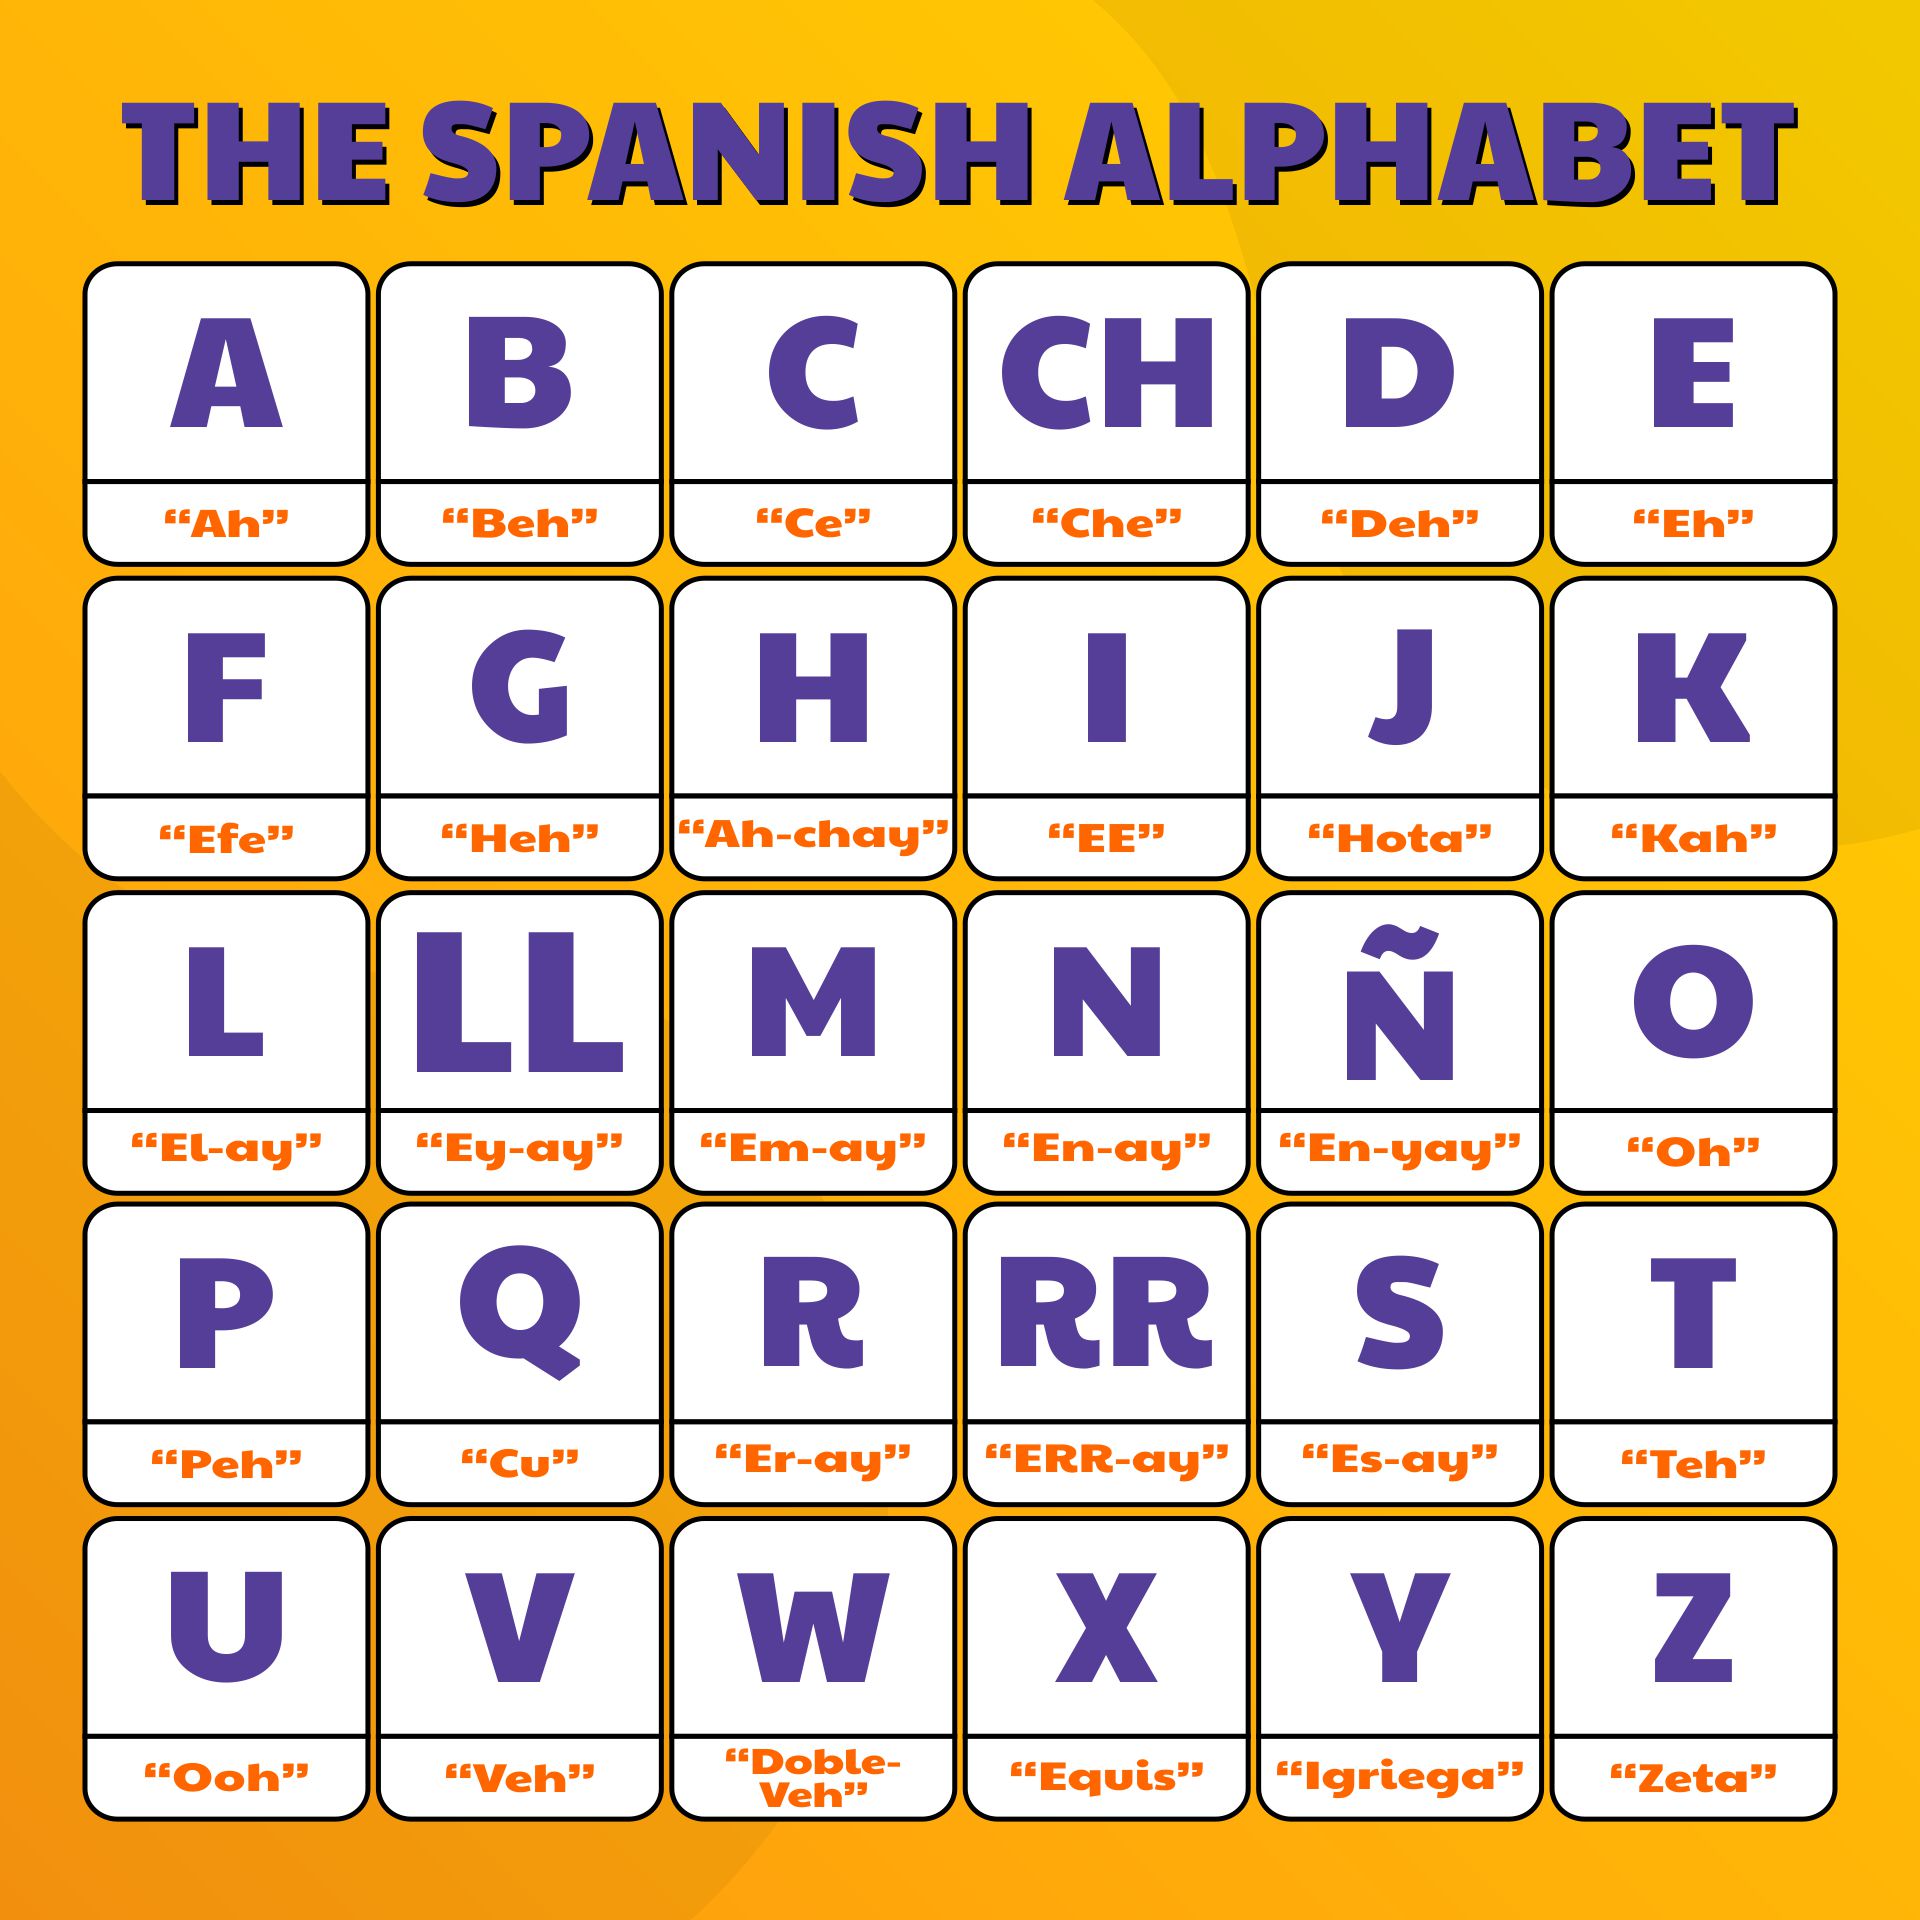 Spanish Alphabet Cards - 10 Free PDF Printables | Printablee